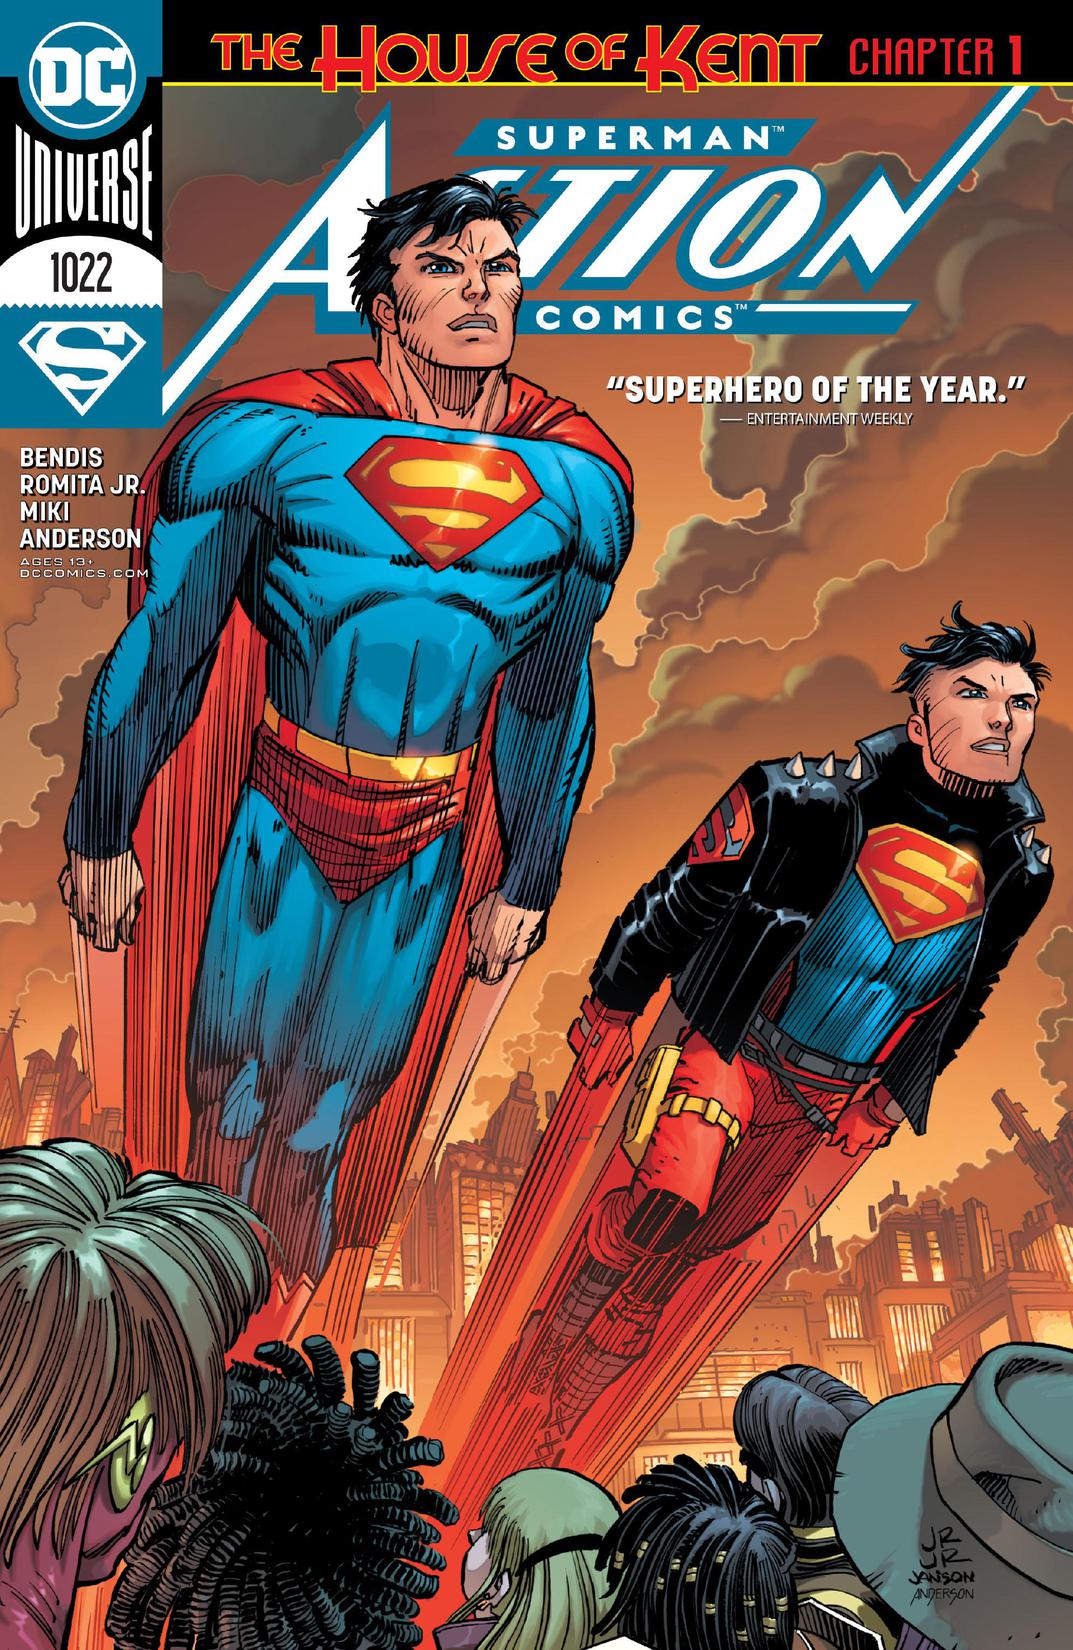 Action Comics (2016-) #1022 preview images